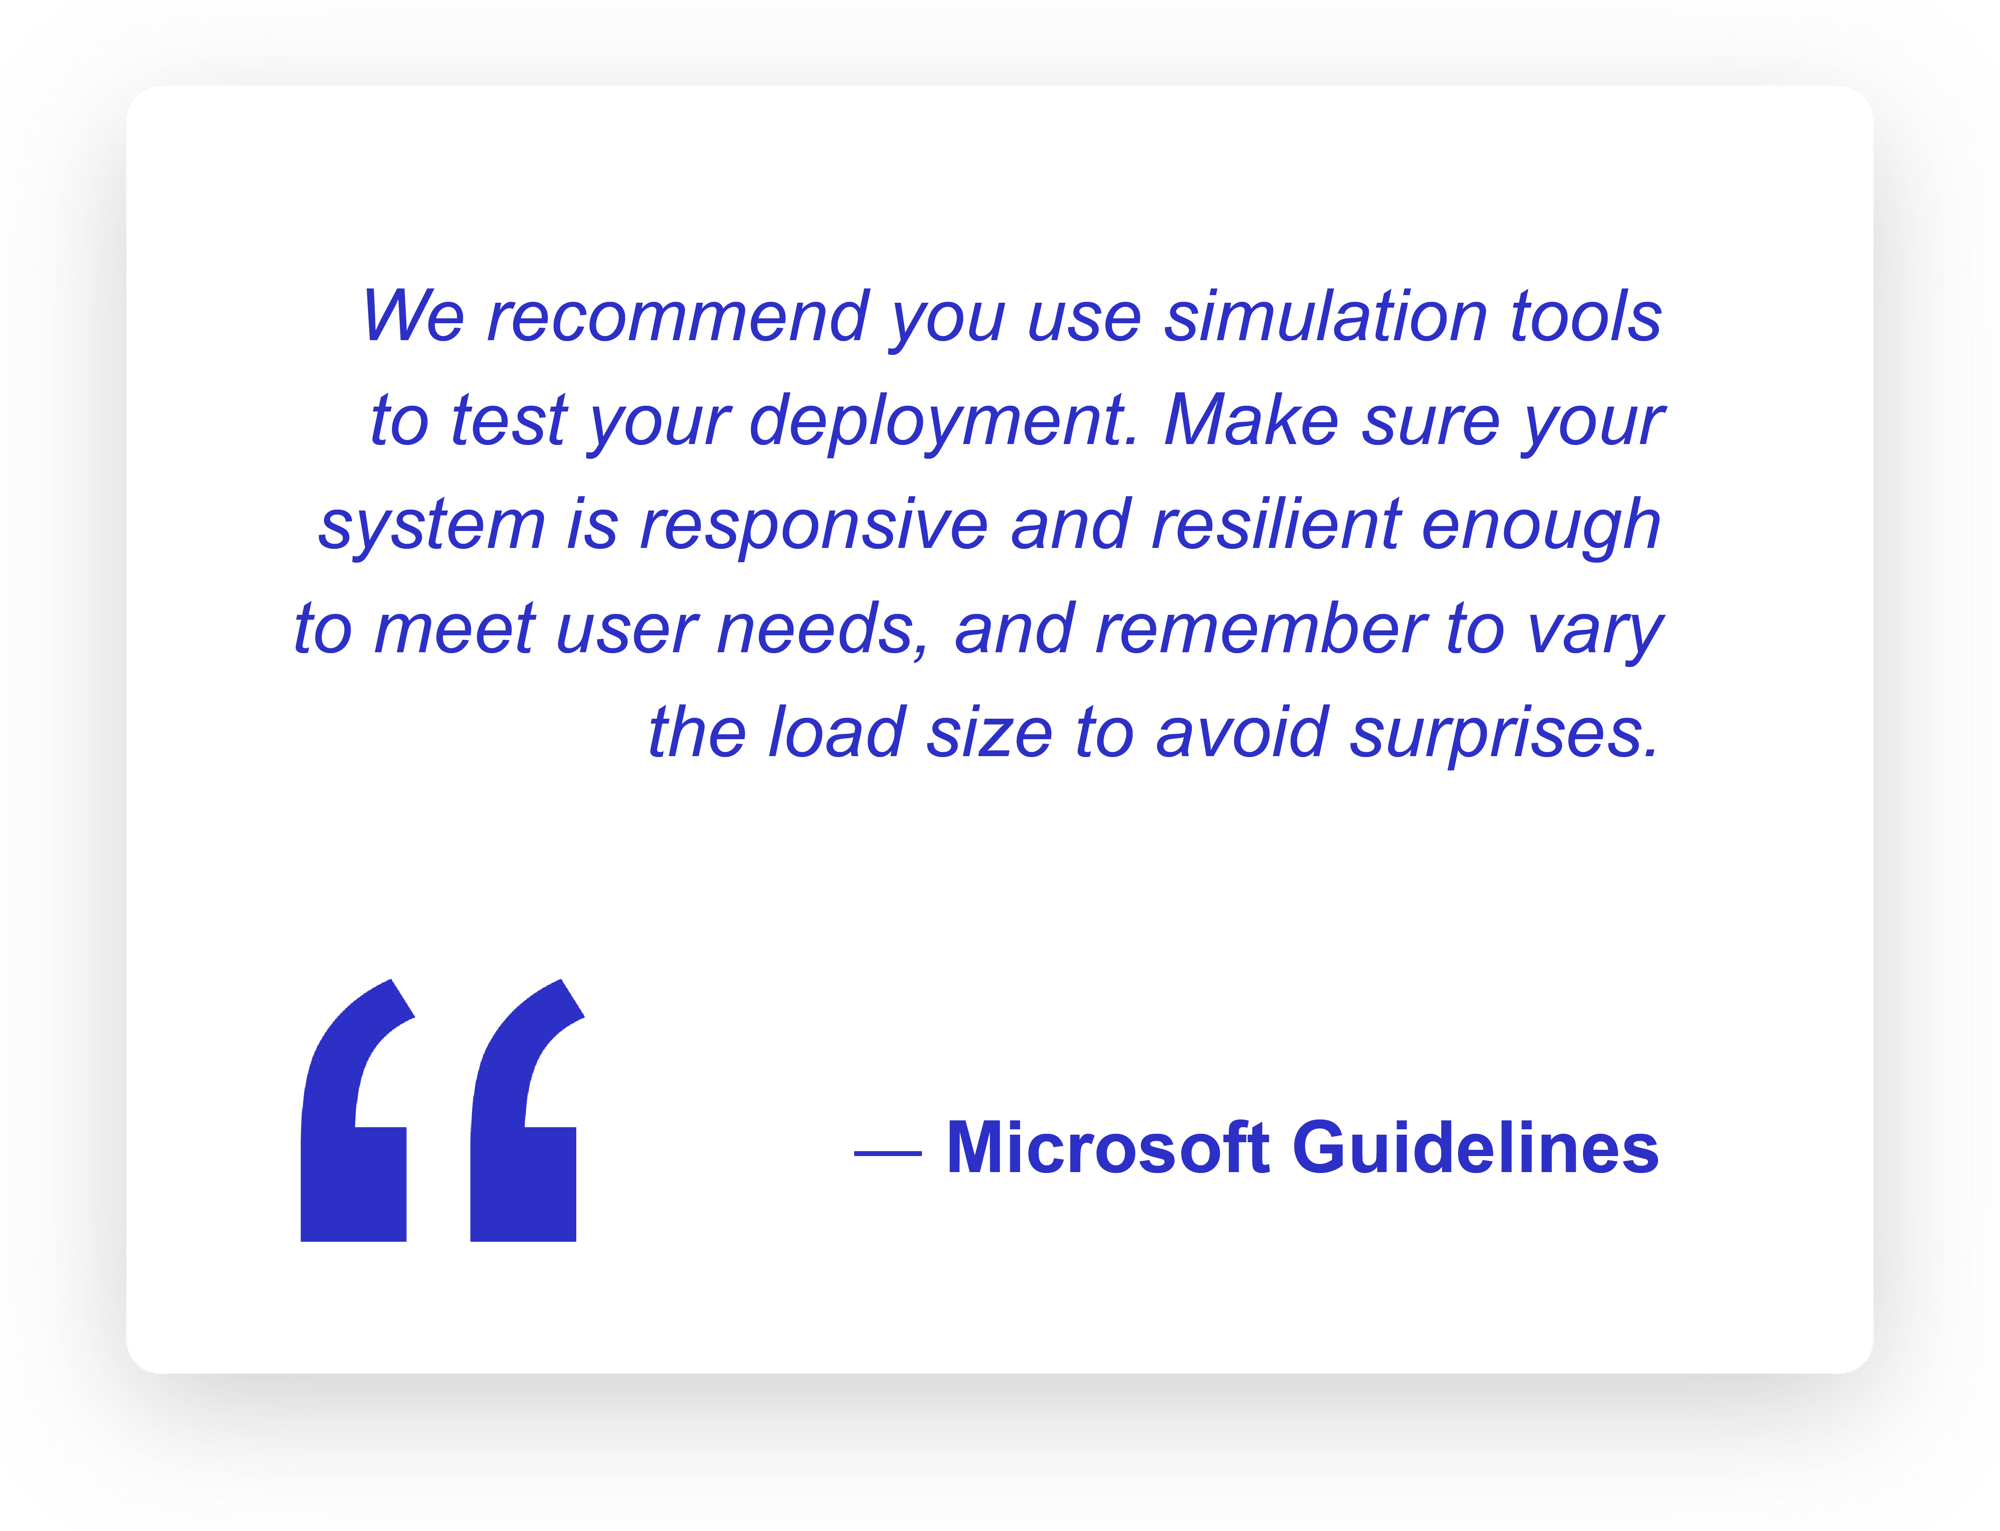 Microsoft Guidelines